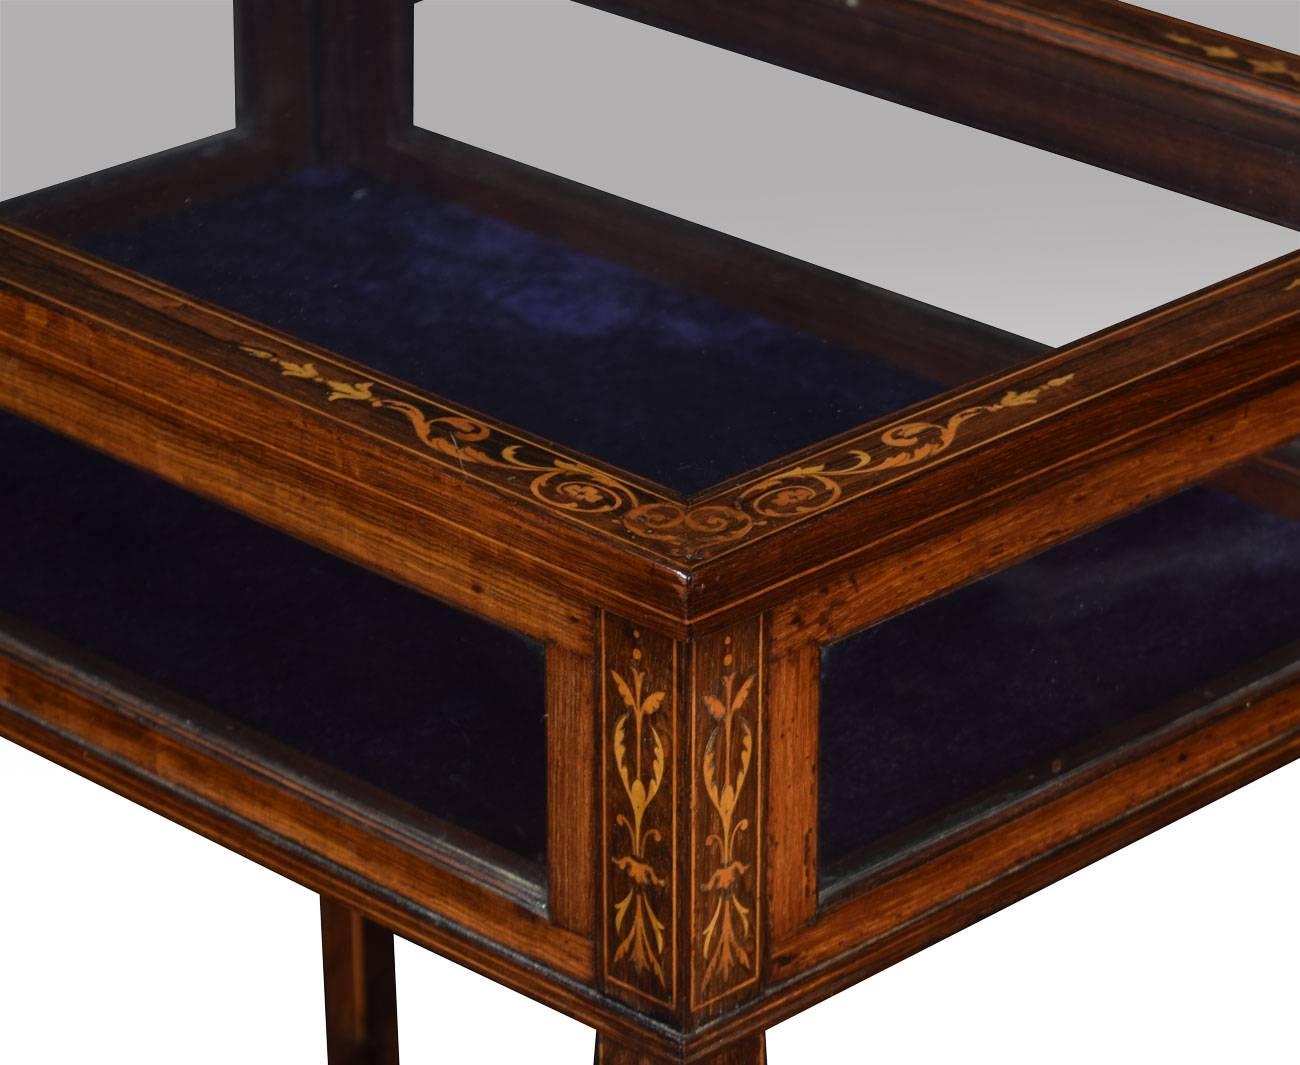 English Edwardian rosewood and inlaid rectangular bijouterie display table